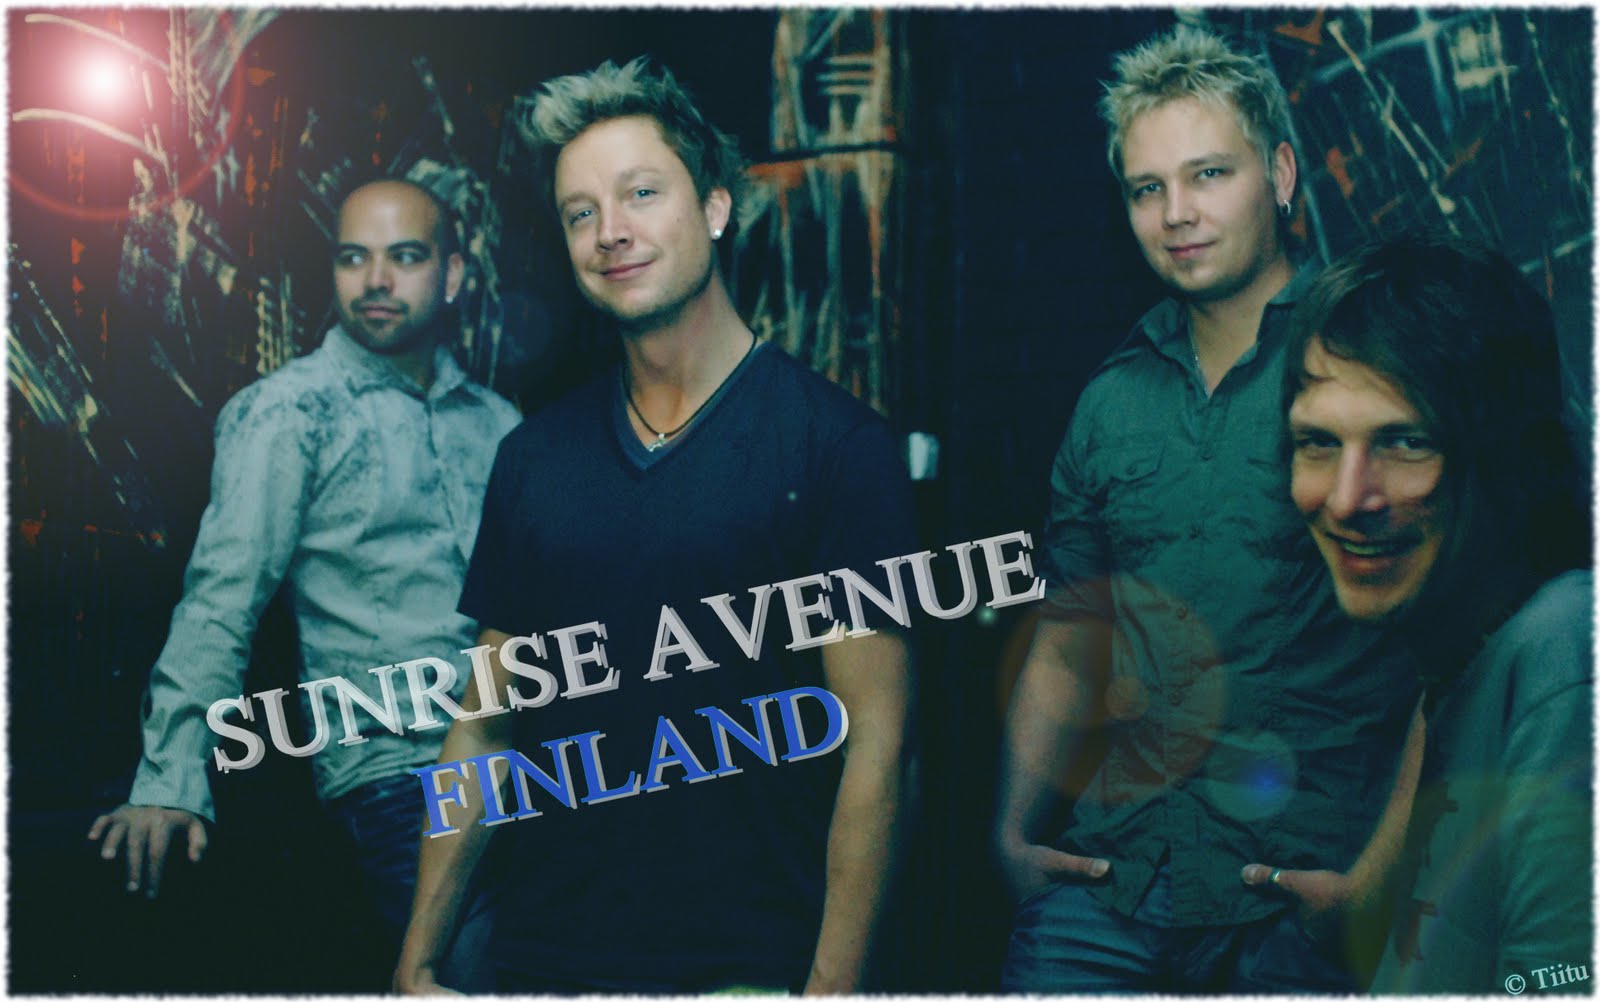 sunrise avenue finnland tour